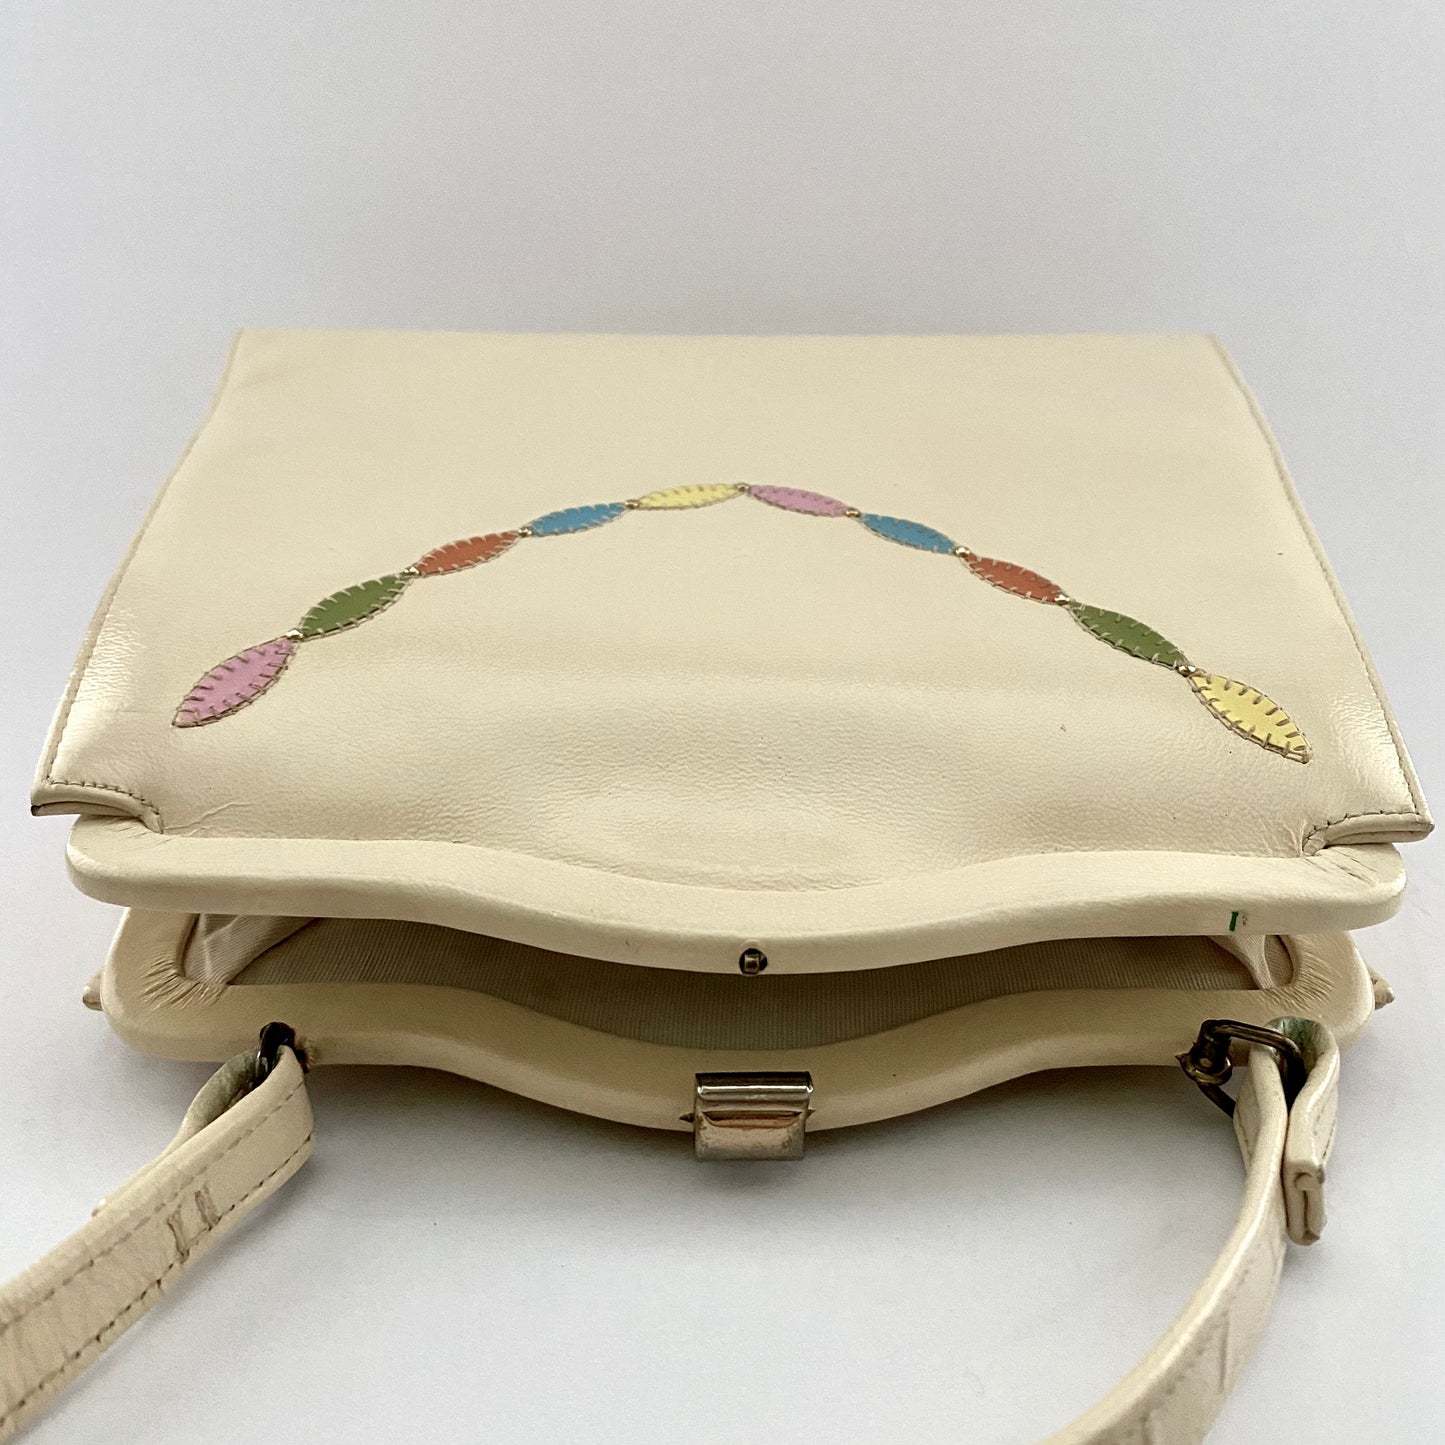 1950s Ivory Stylized Kelly Handbag